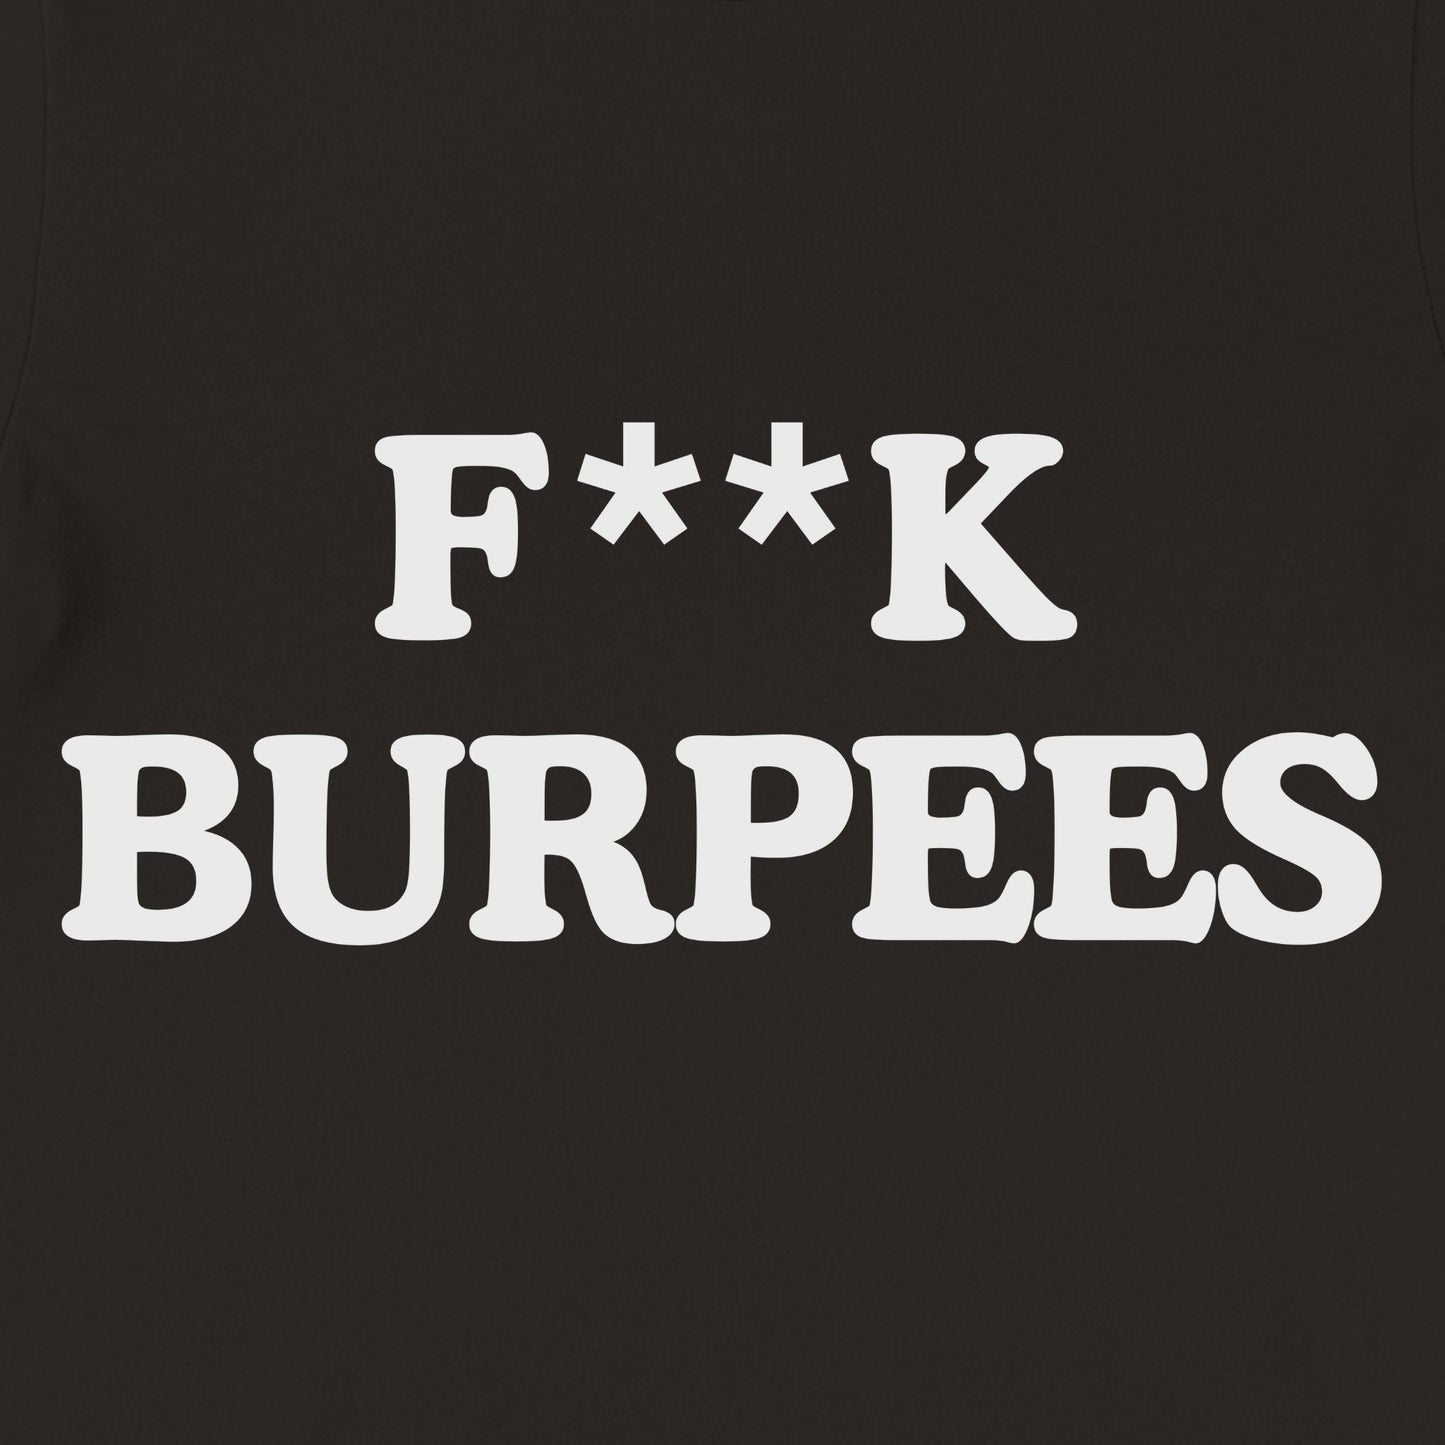 Burpees T-Shirt